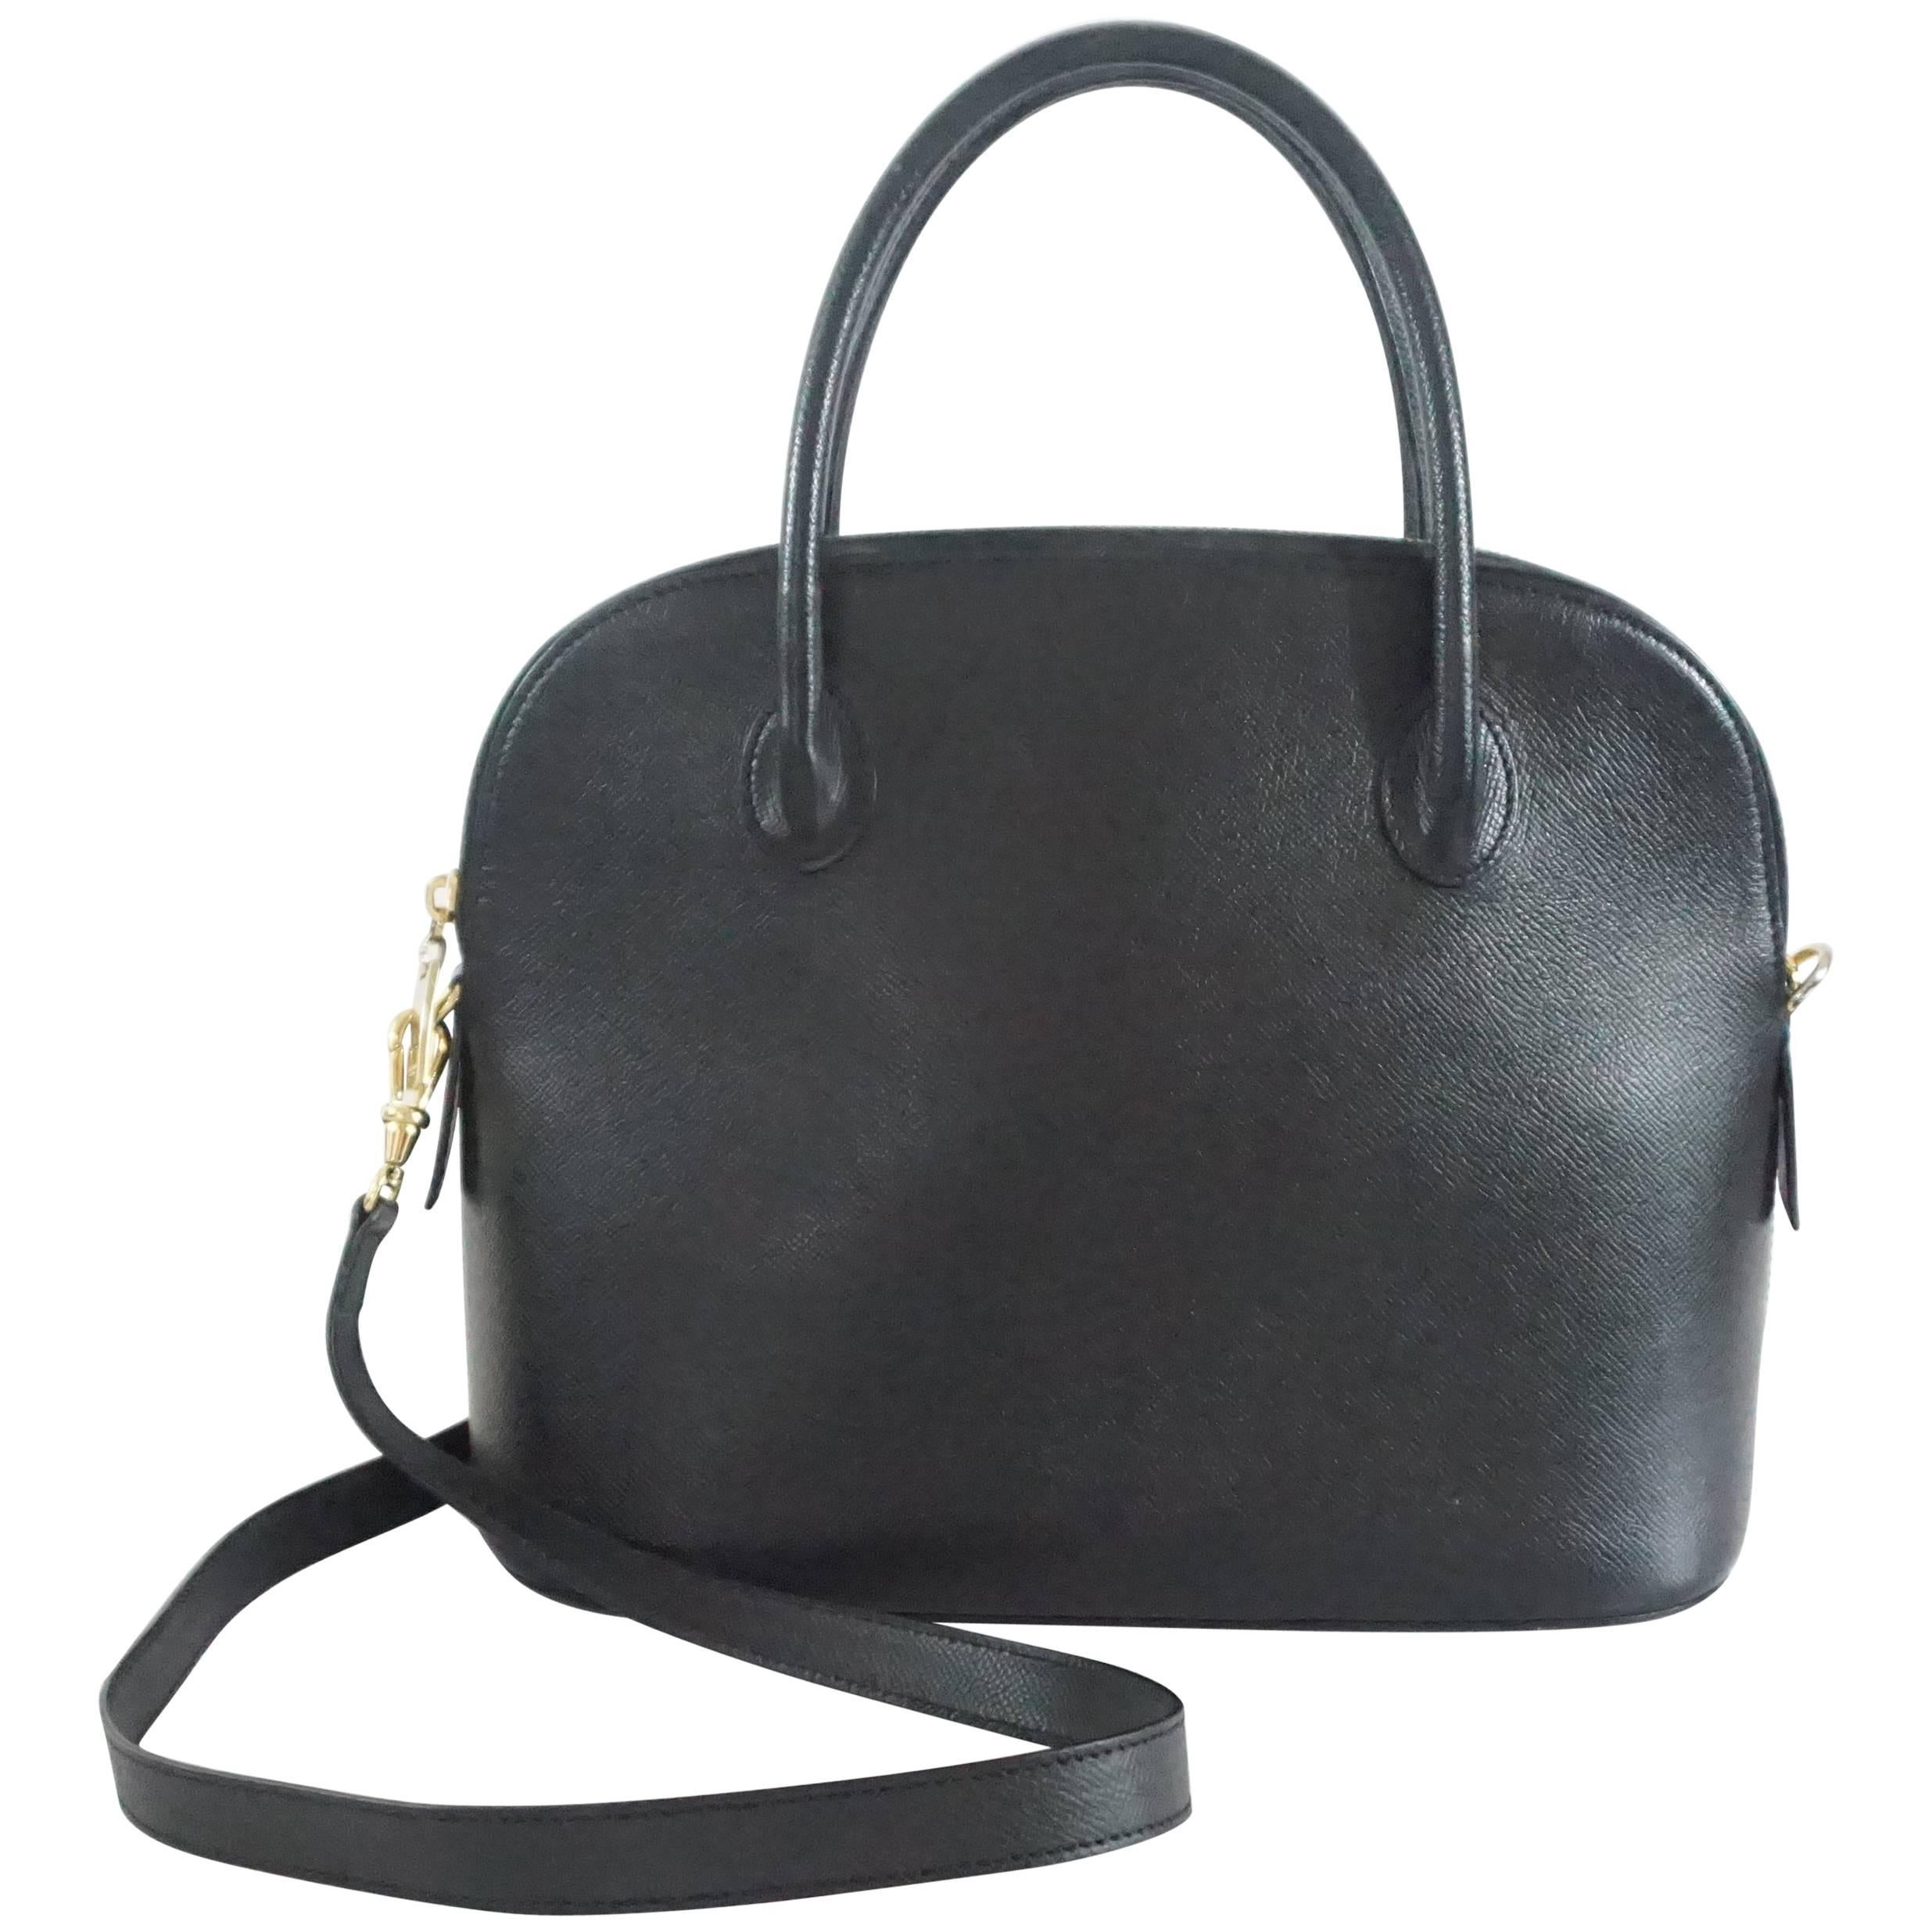 Celine Black Saffiano Leather 2 Way Top Handle Bag